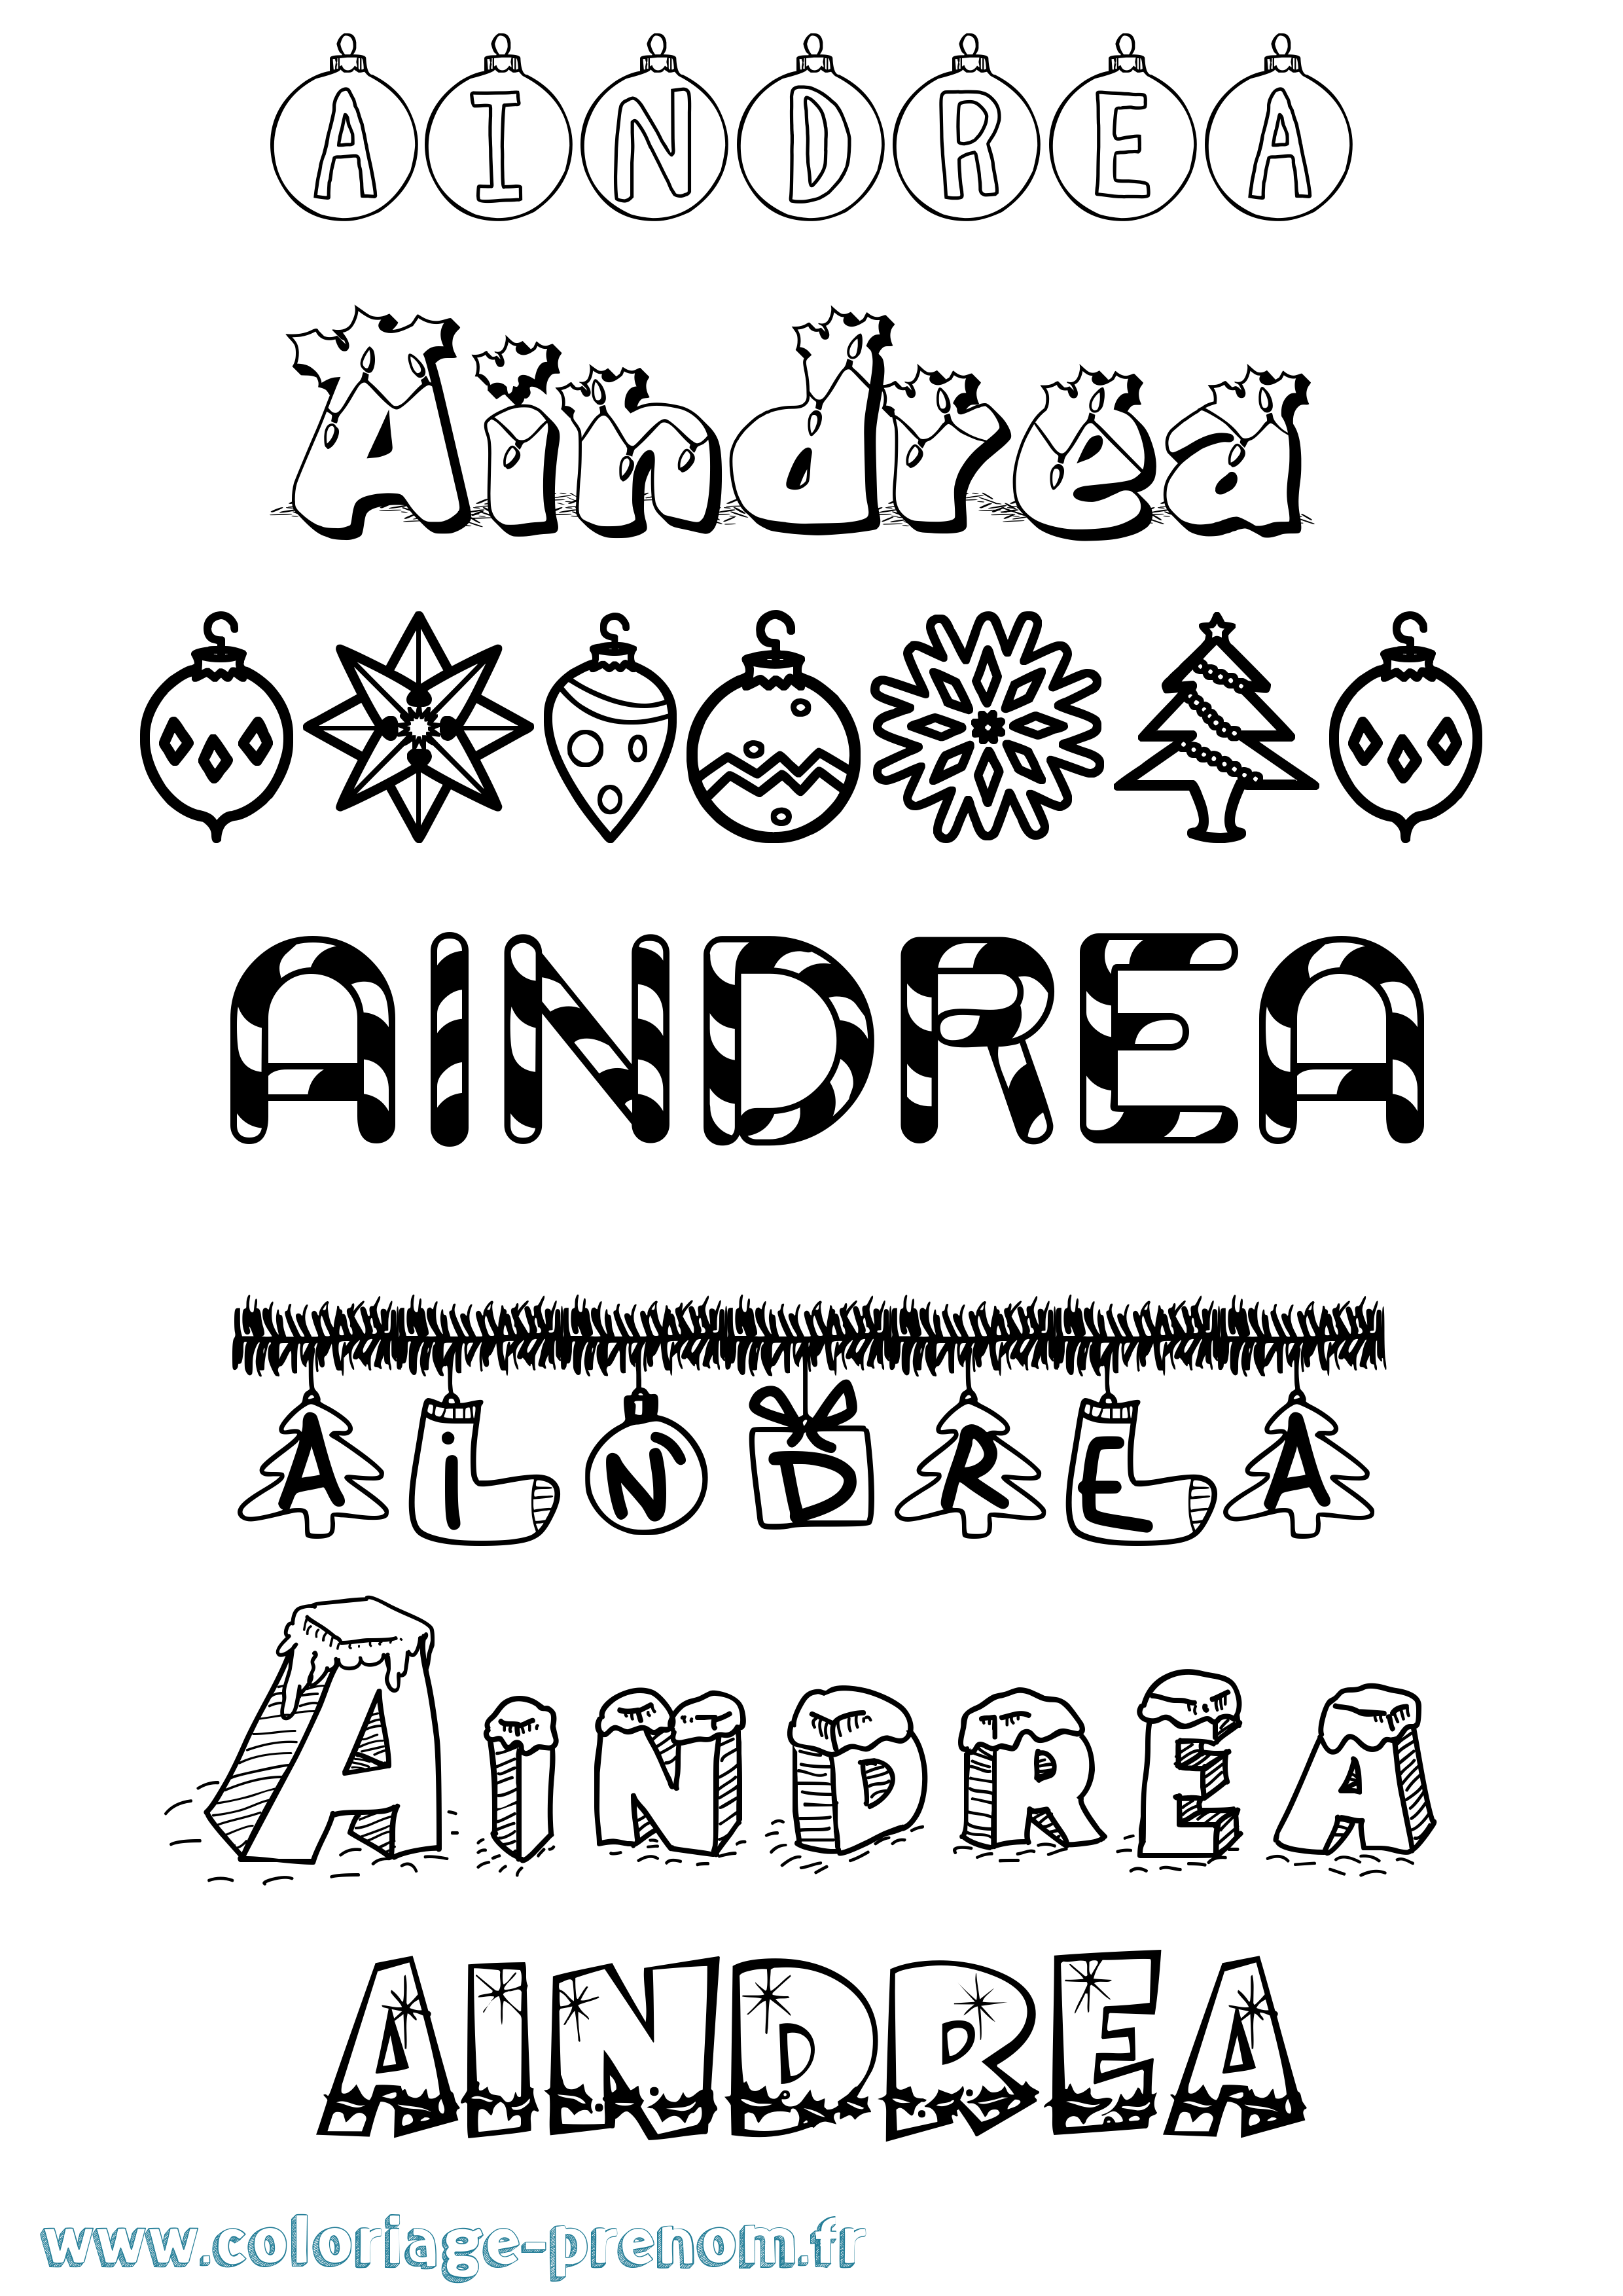 Coloriage prénom Aindrea